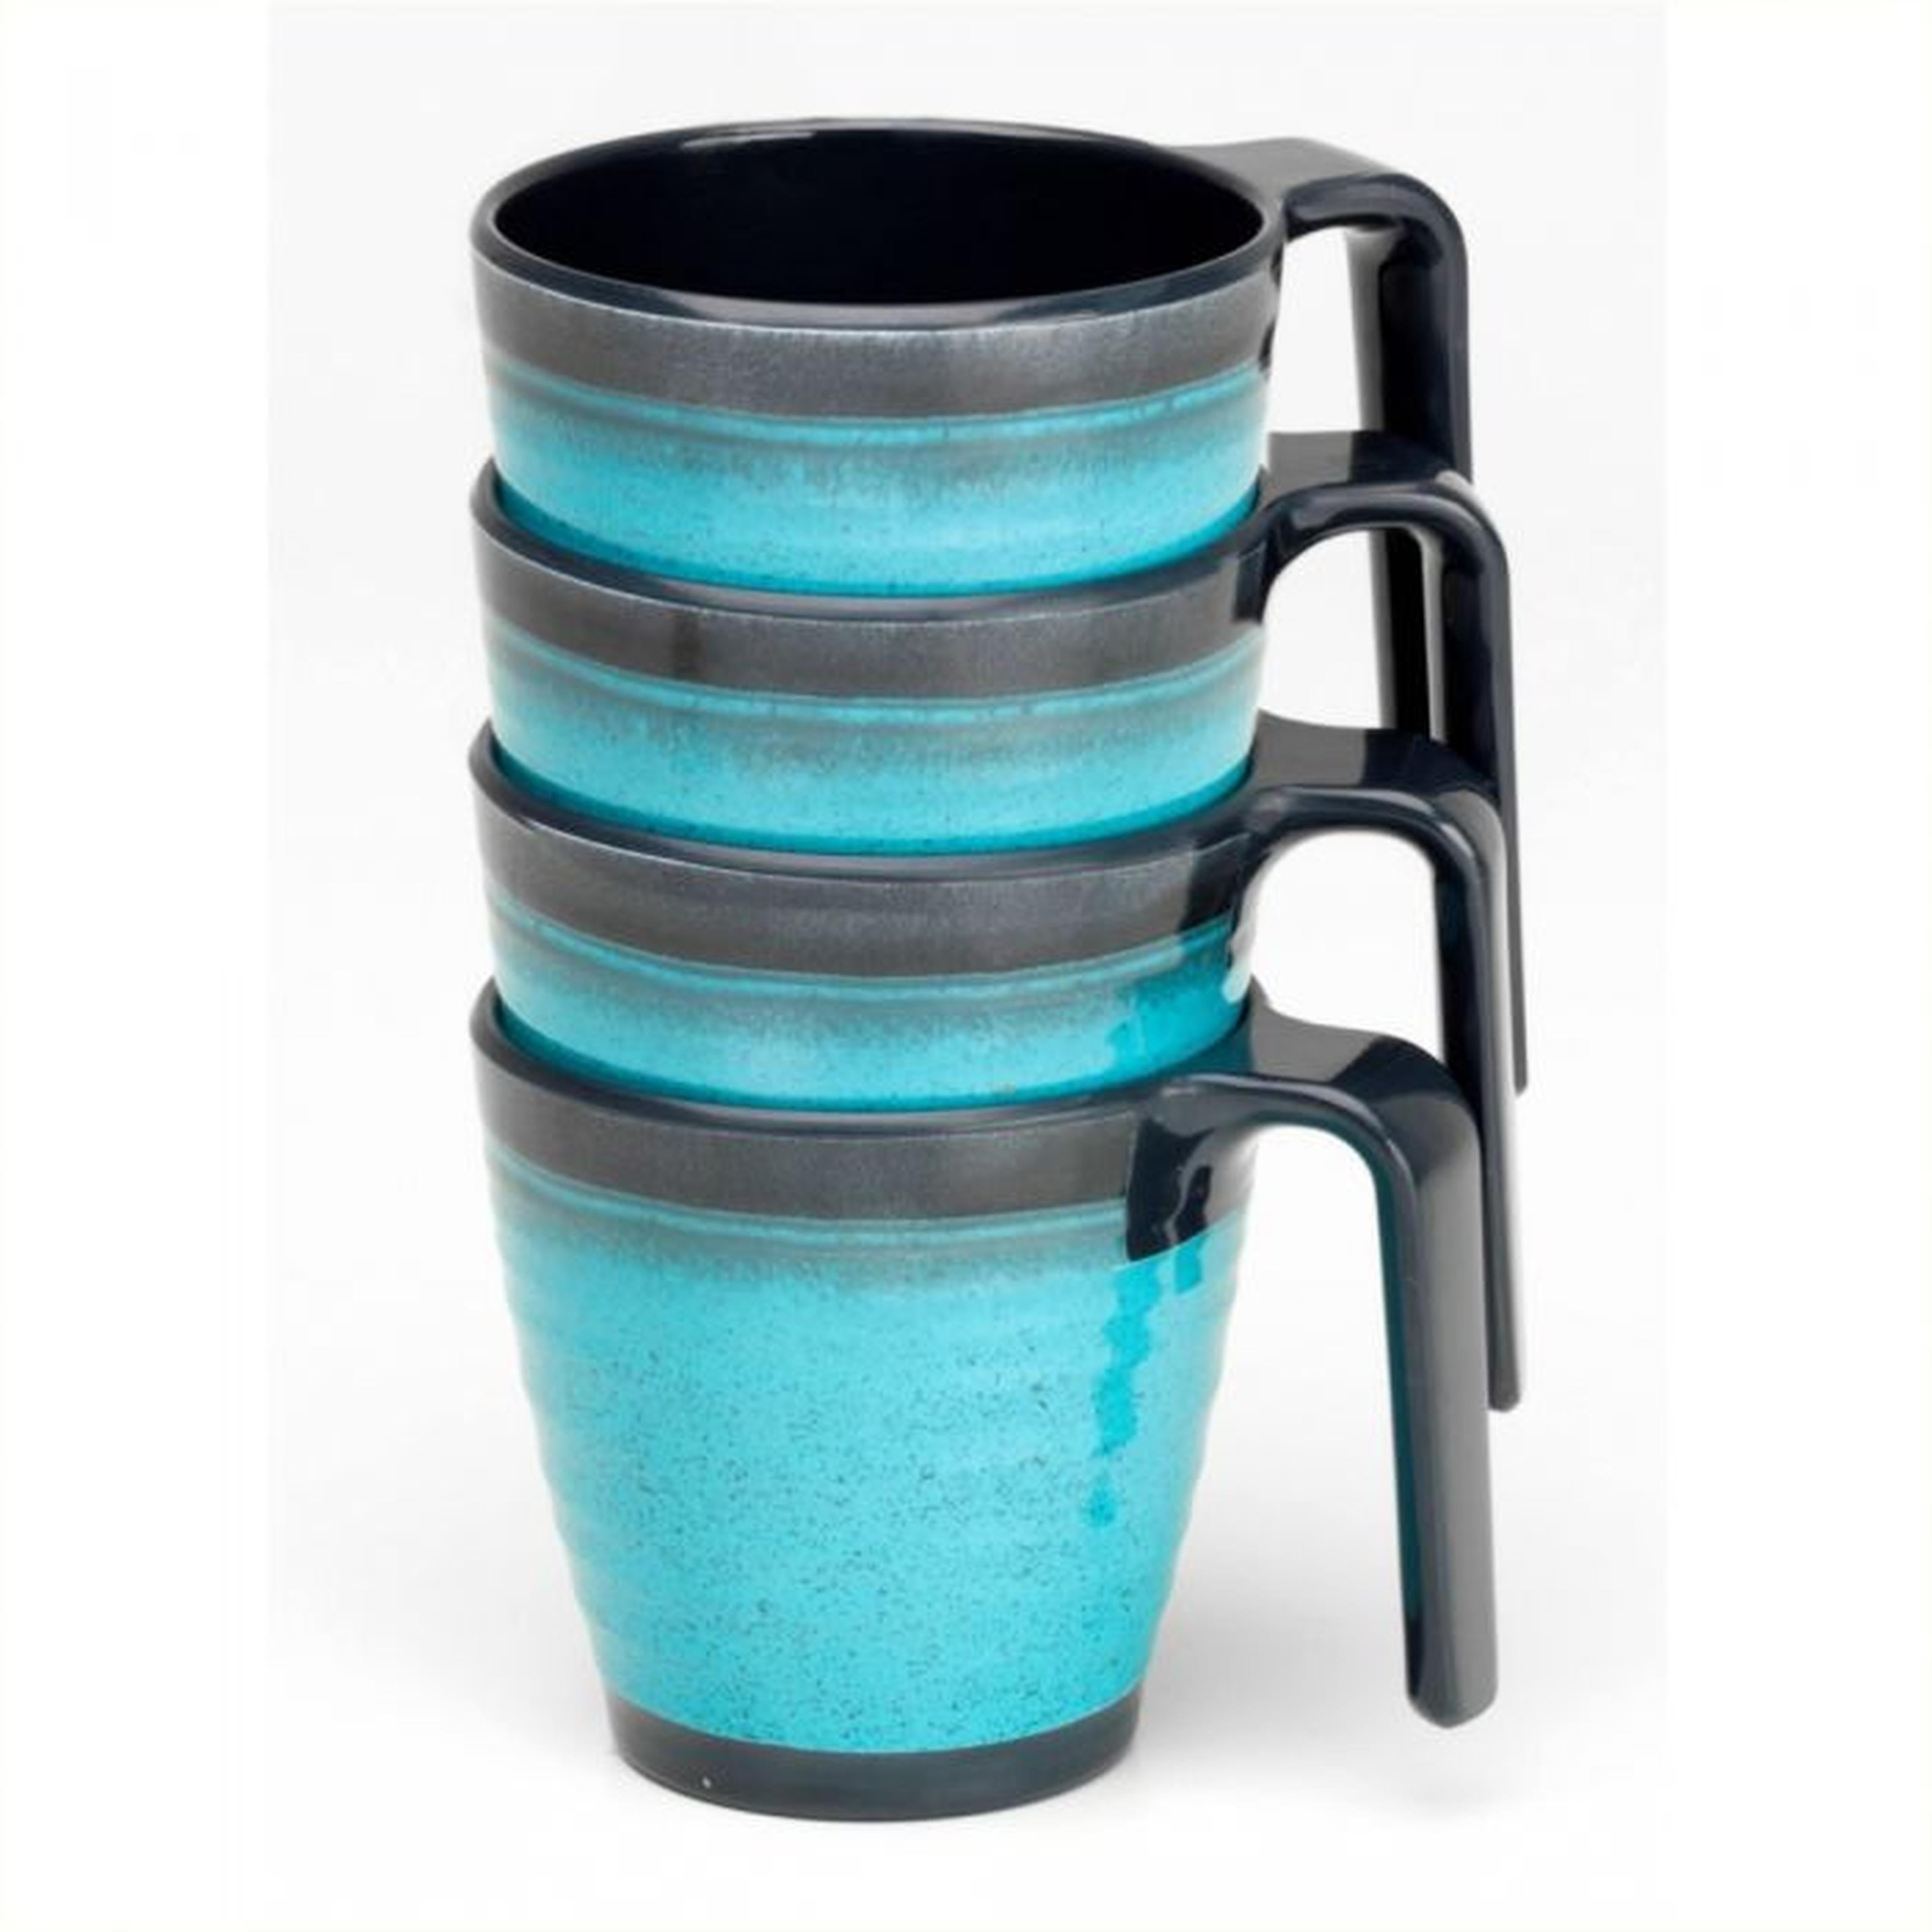 Flamefield granite aqua melamine mugs set of 4